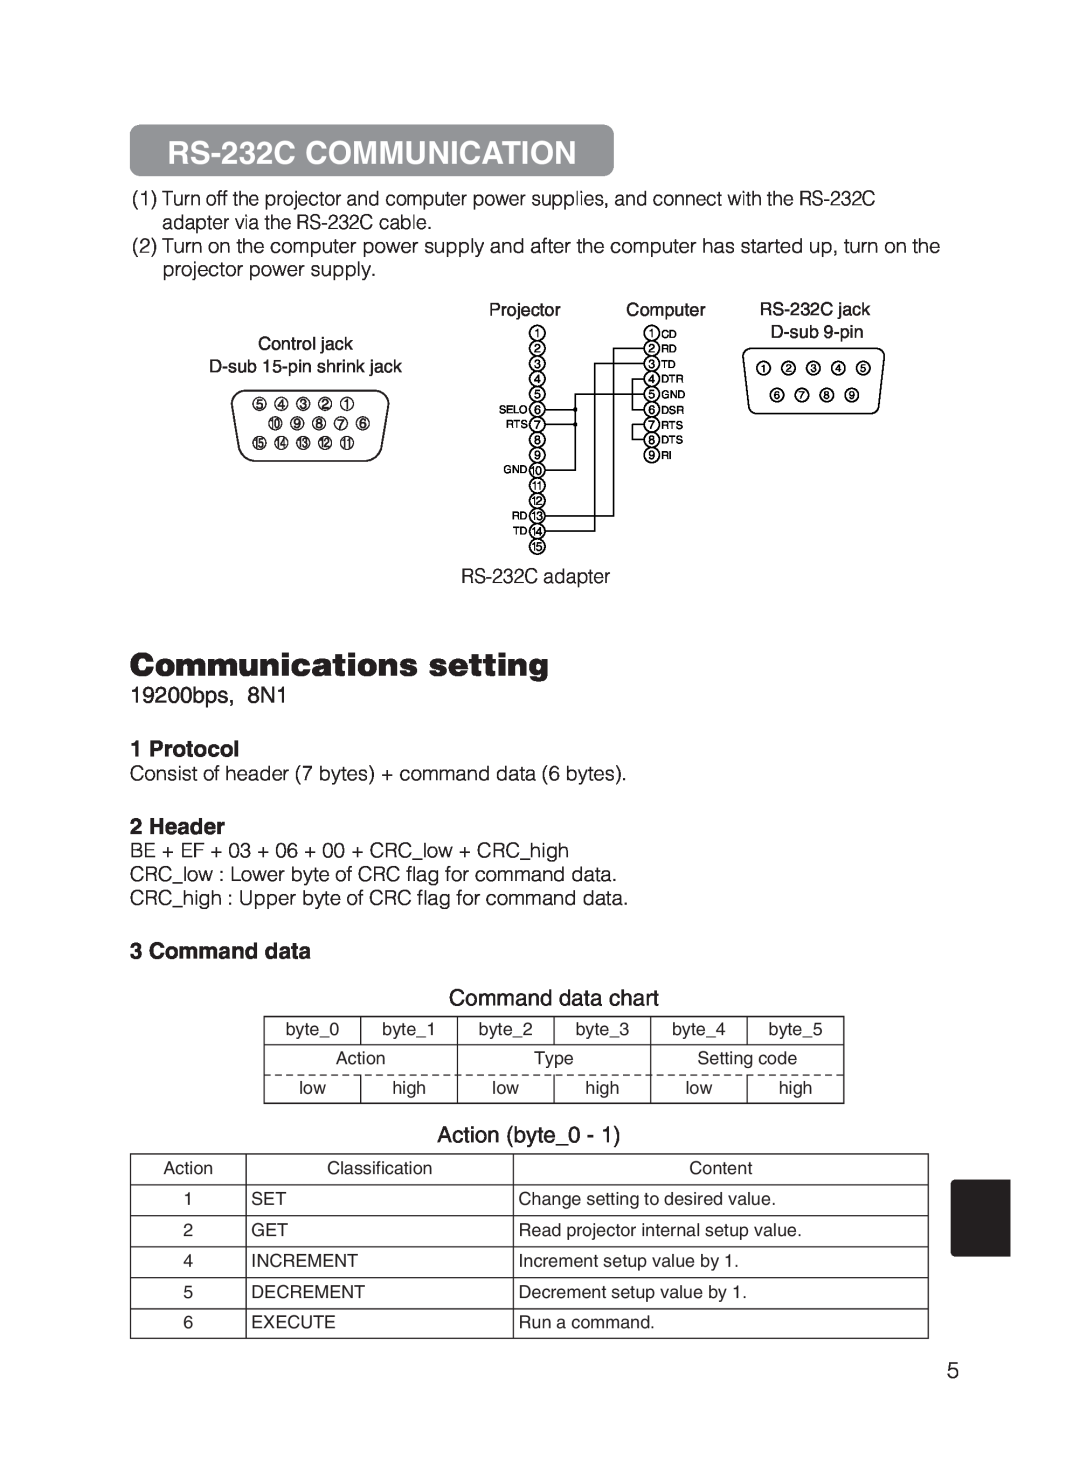 Hitachi CP-X870 RS-232CCOMMUNICATION, Communications setting, 19200bps, 8N1, Protocol, Header, Command data, Action byte 